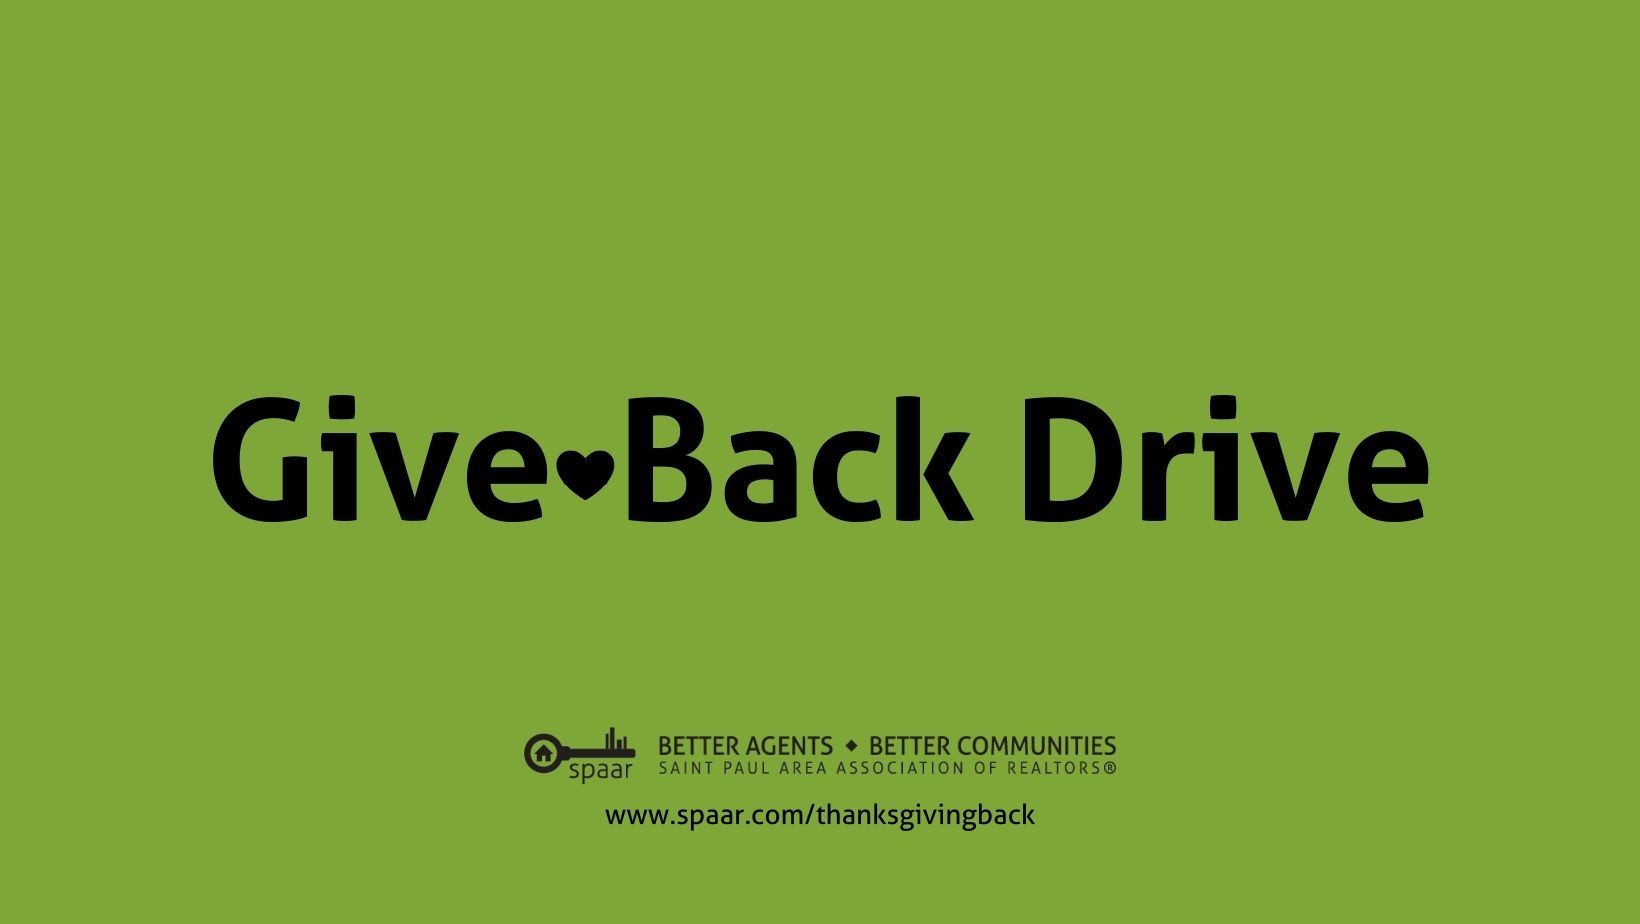 Give-Back Drive